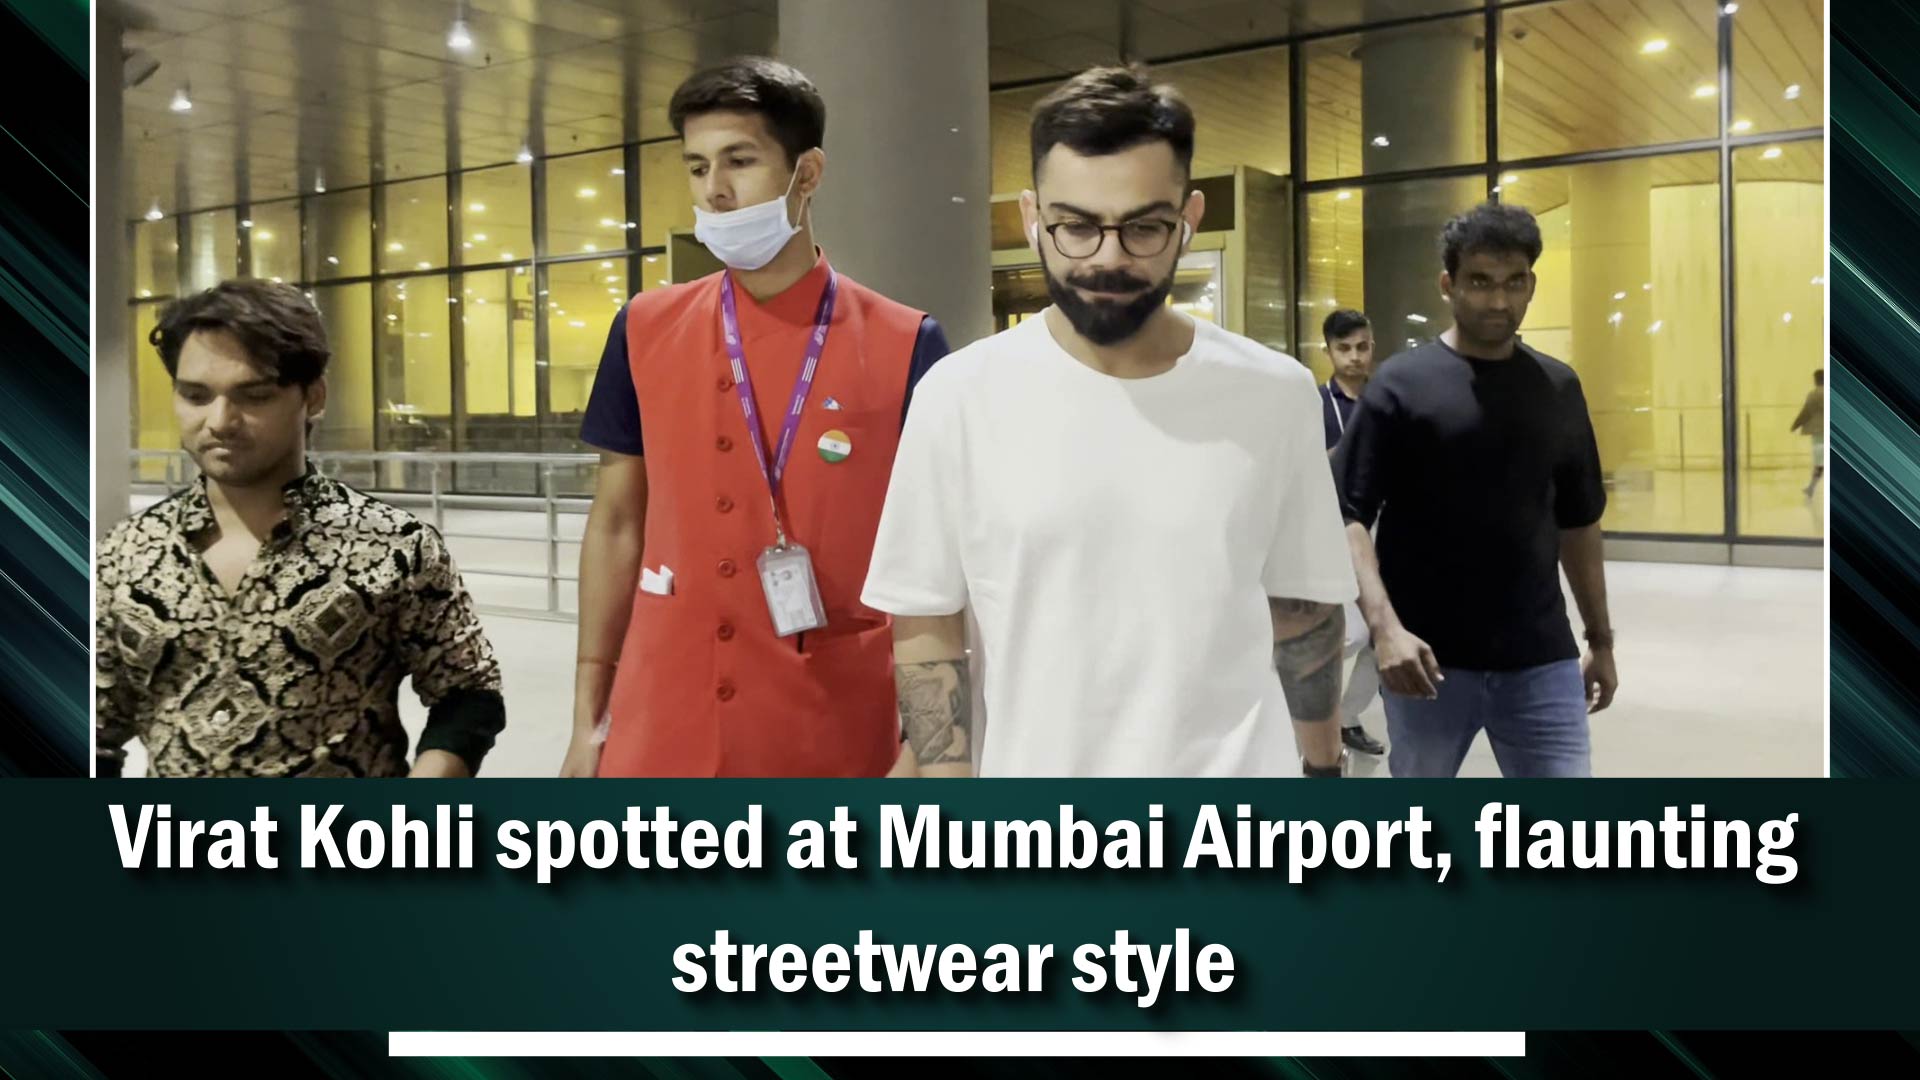 Virat Kohli spotted at Mumbai Airport, flaunting streetwear style